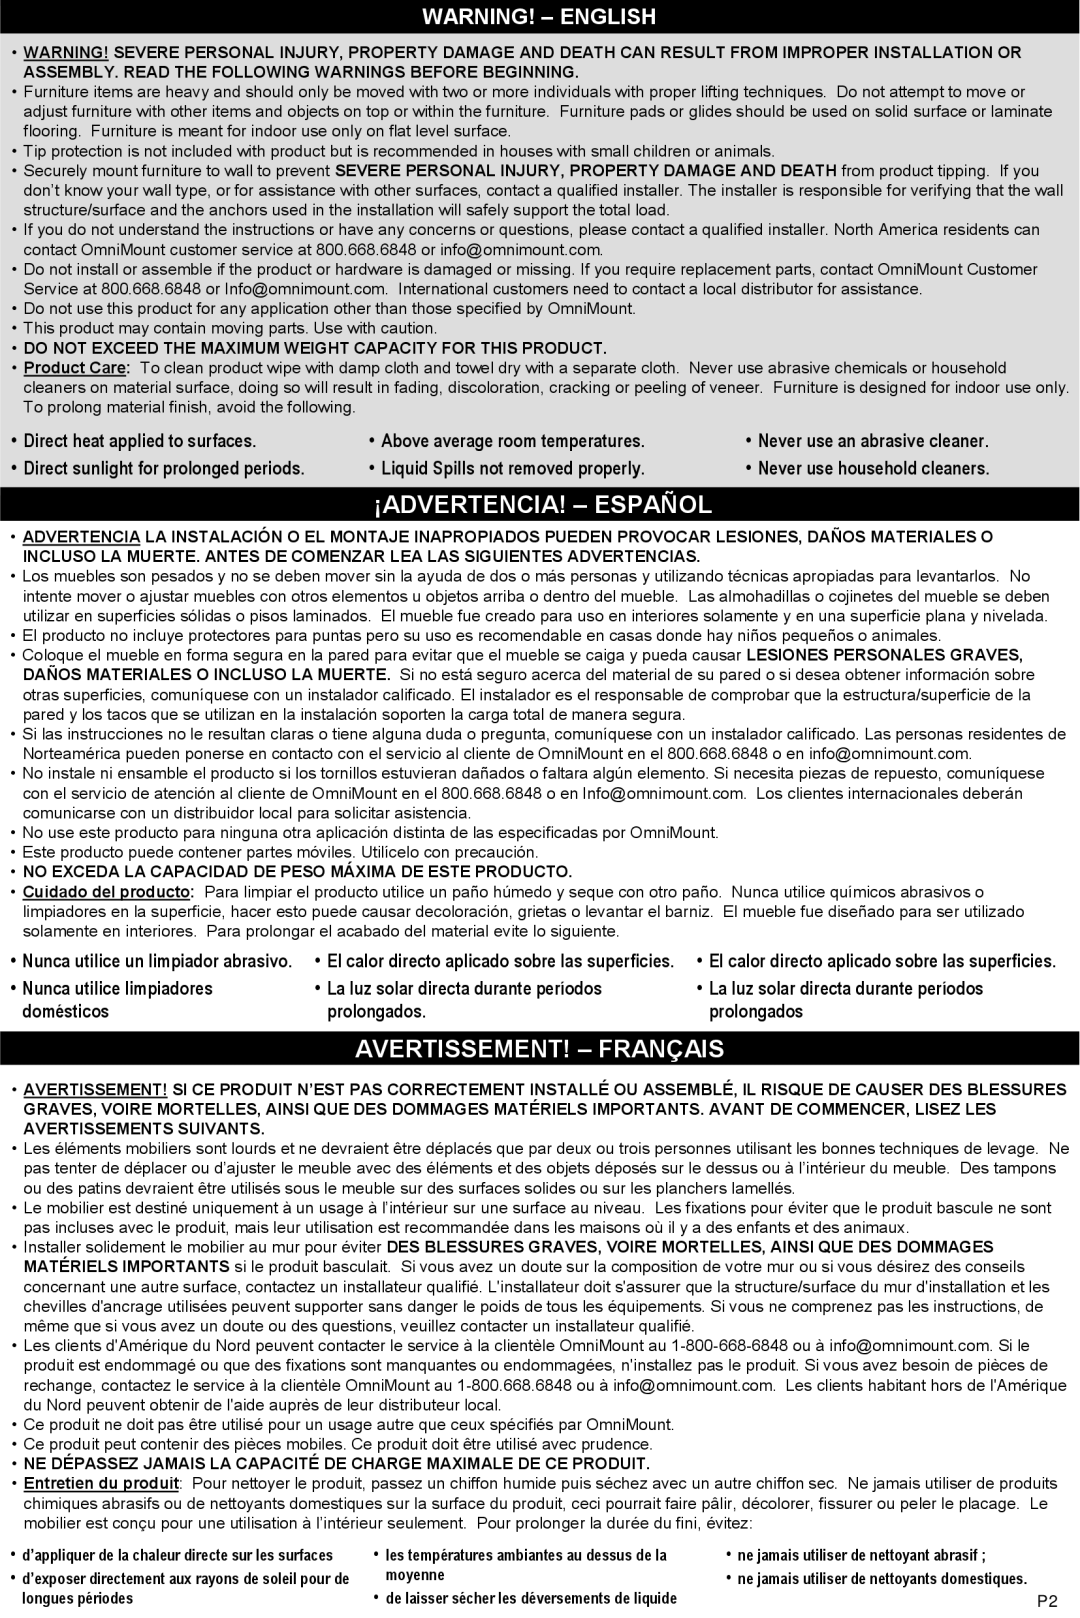 Omnimount RSF.5, UL1100010 instruction manual ¡Advertencia! – Español, Avertissement! – Français, Warning! – English 